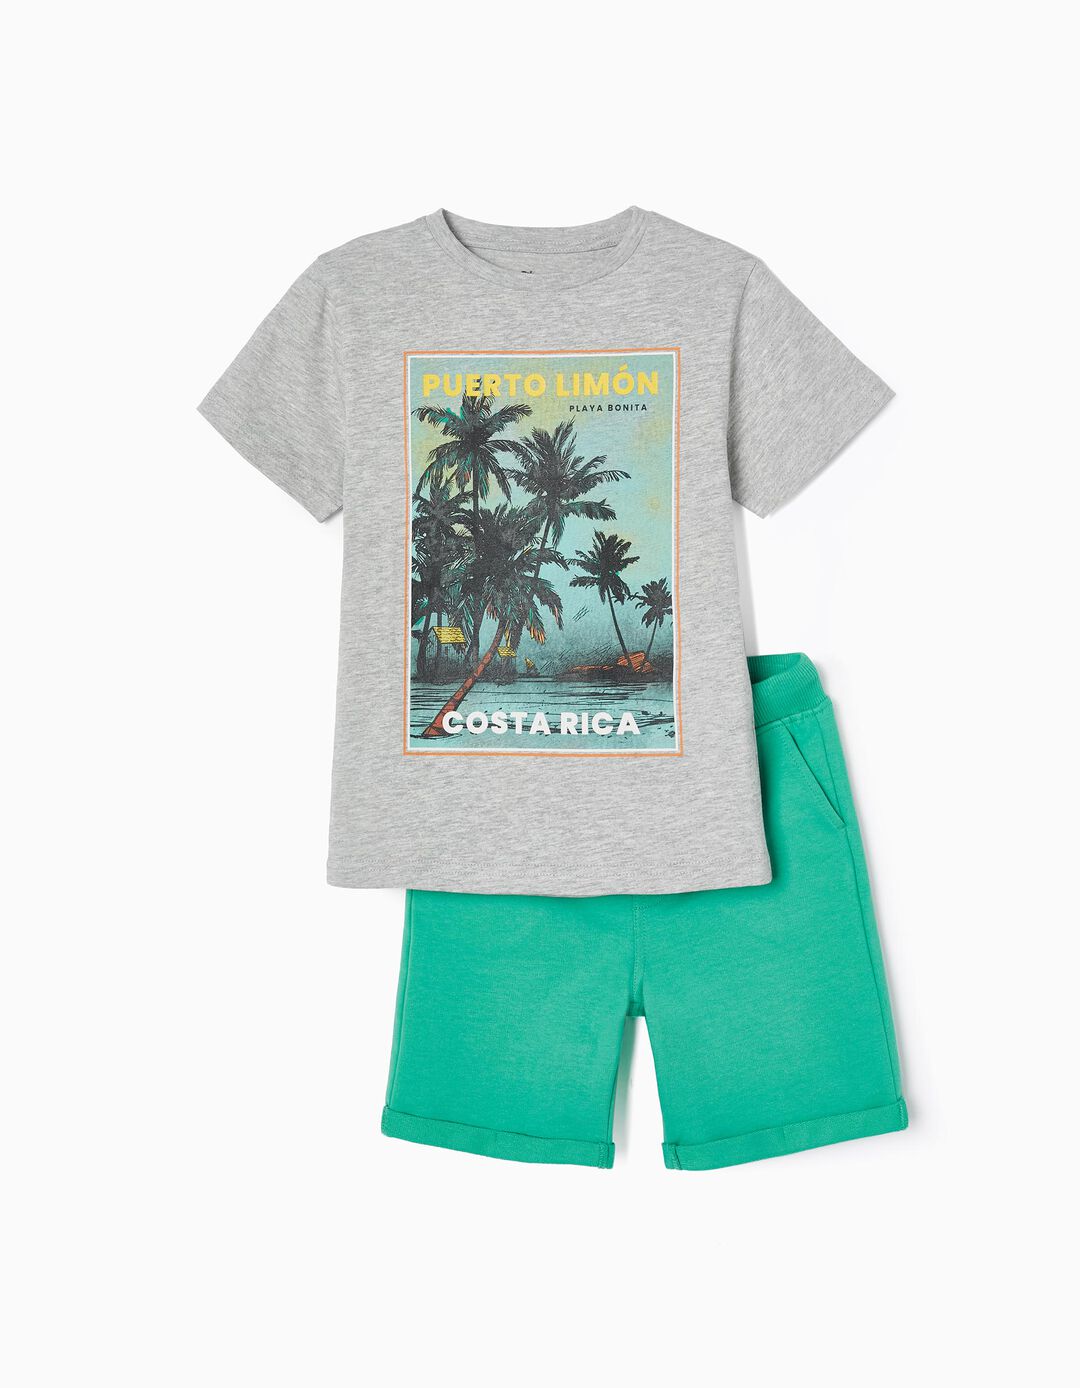 T-shirt + Shorts for Boys 'Costa Rica', Grey/Green